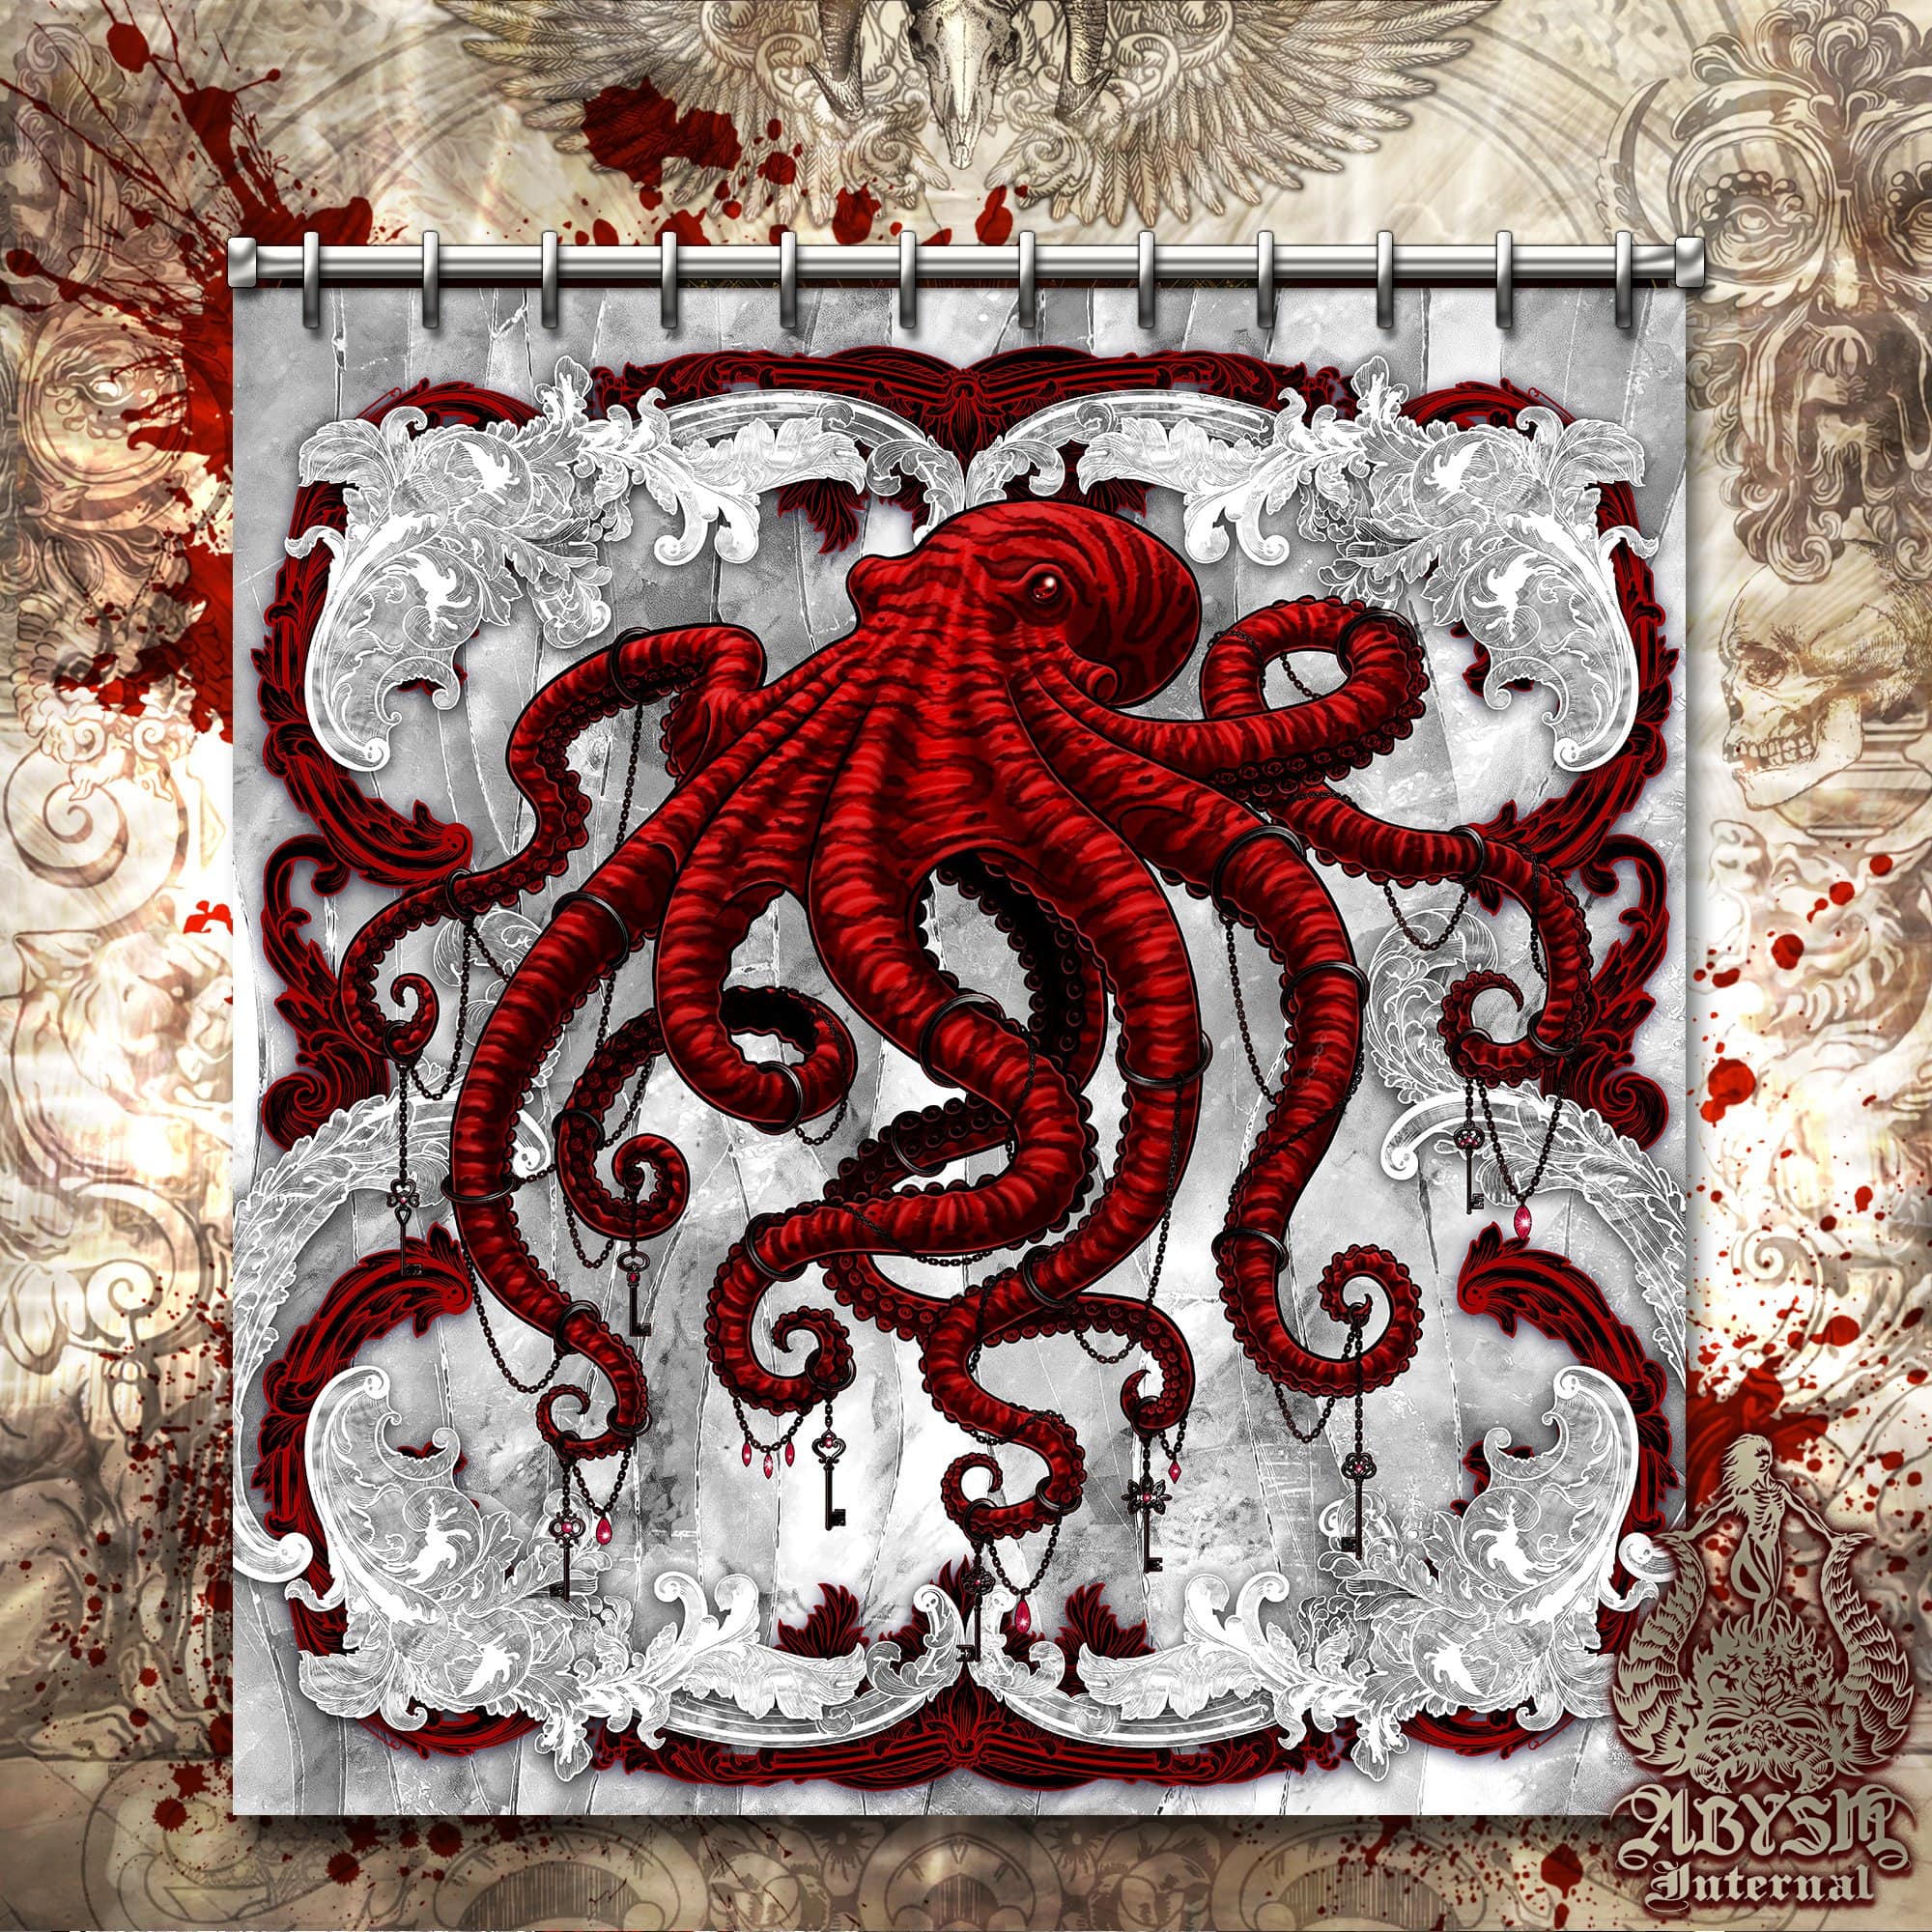 Octopus Shower Curtain, Gothic Bathroom Decor - Bloody - Abysm Internal